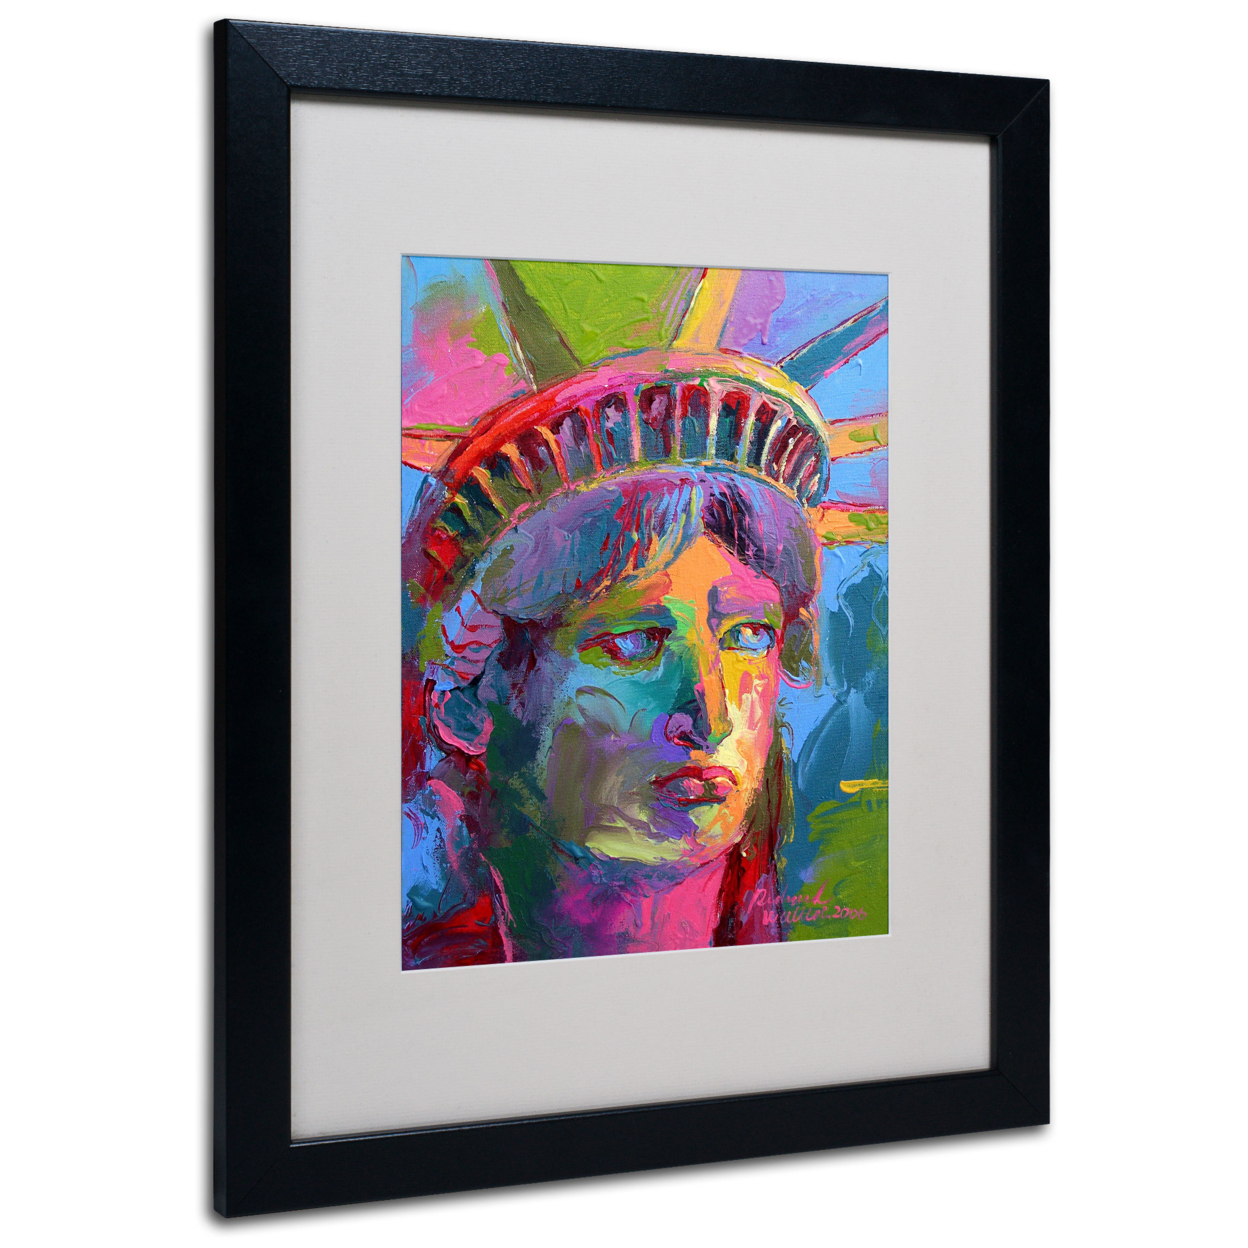 Richard Wallich 'Lady Liberty 2' Black Wooden Framed Art 18 X 22 Inches